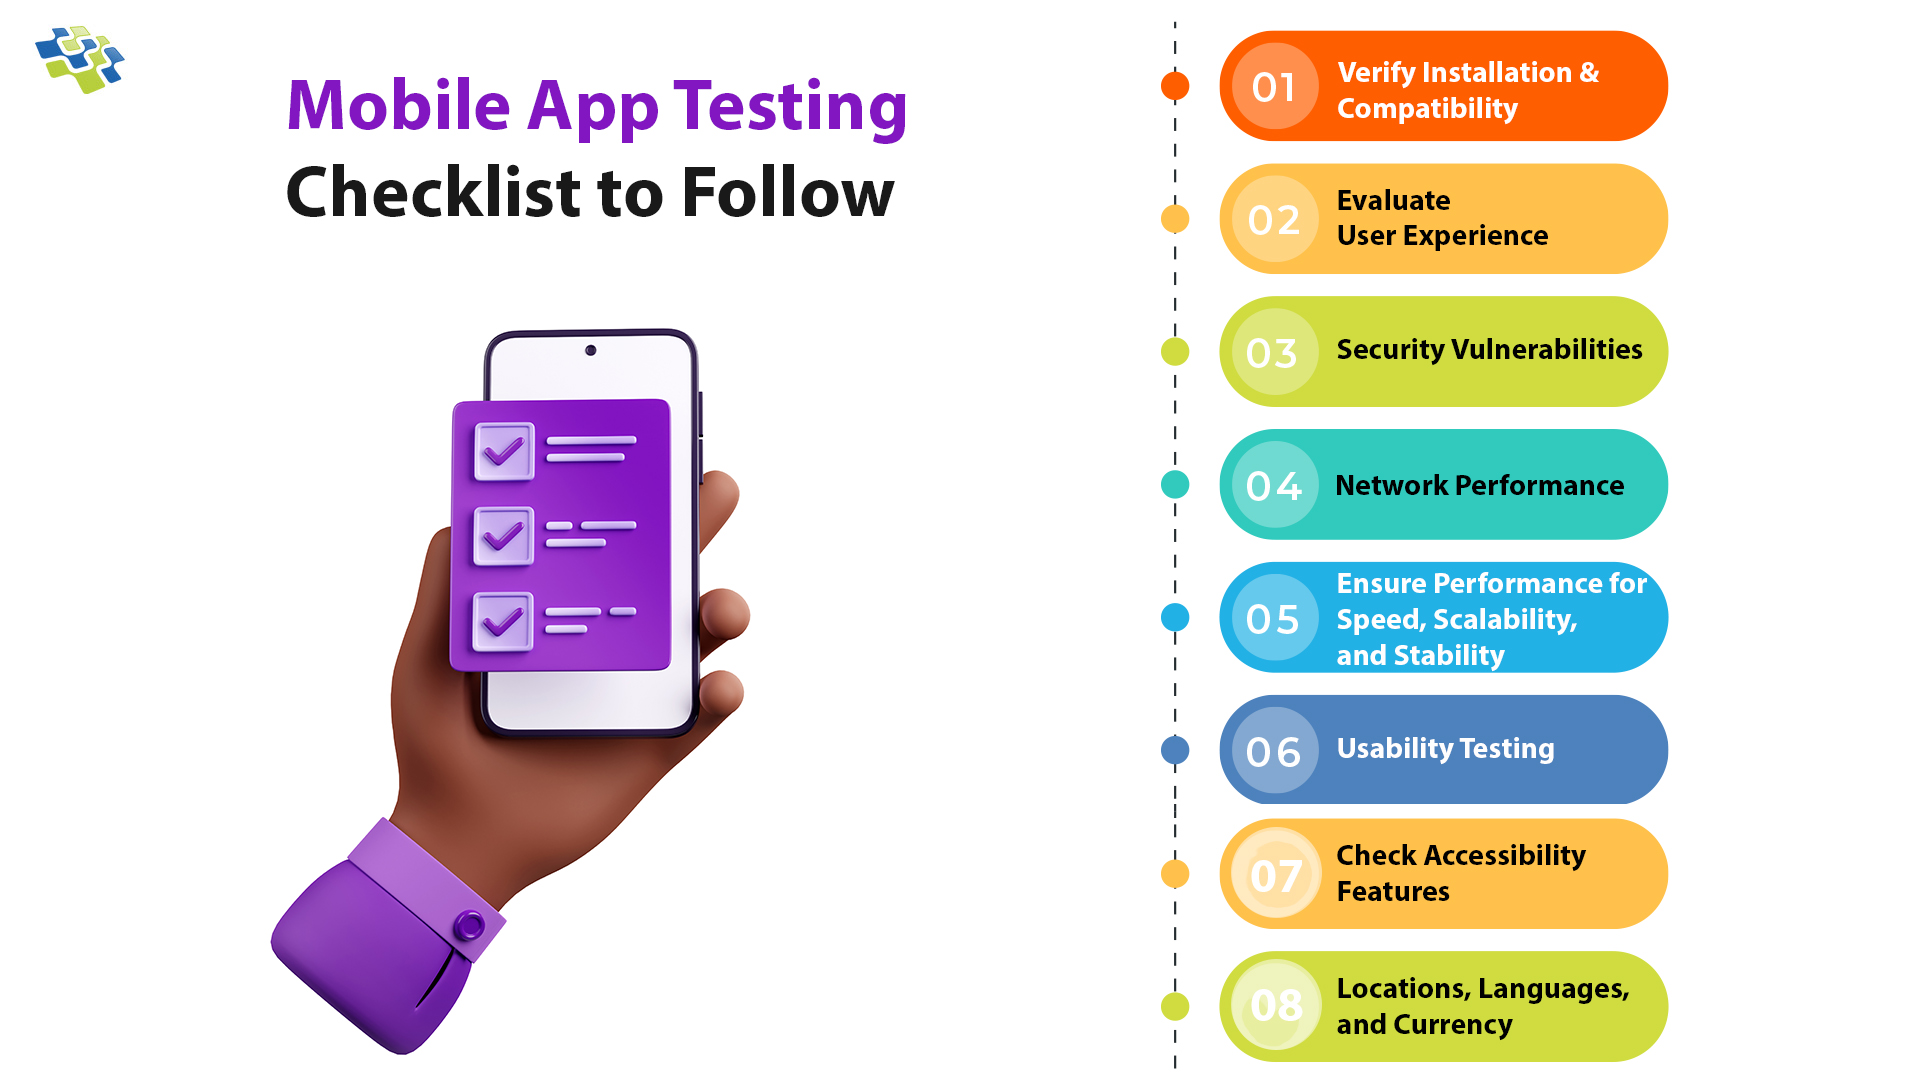 Mobile app testing checklist steps